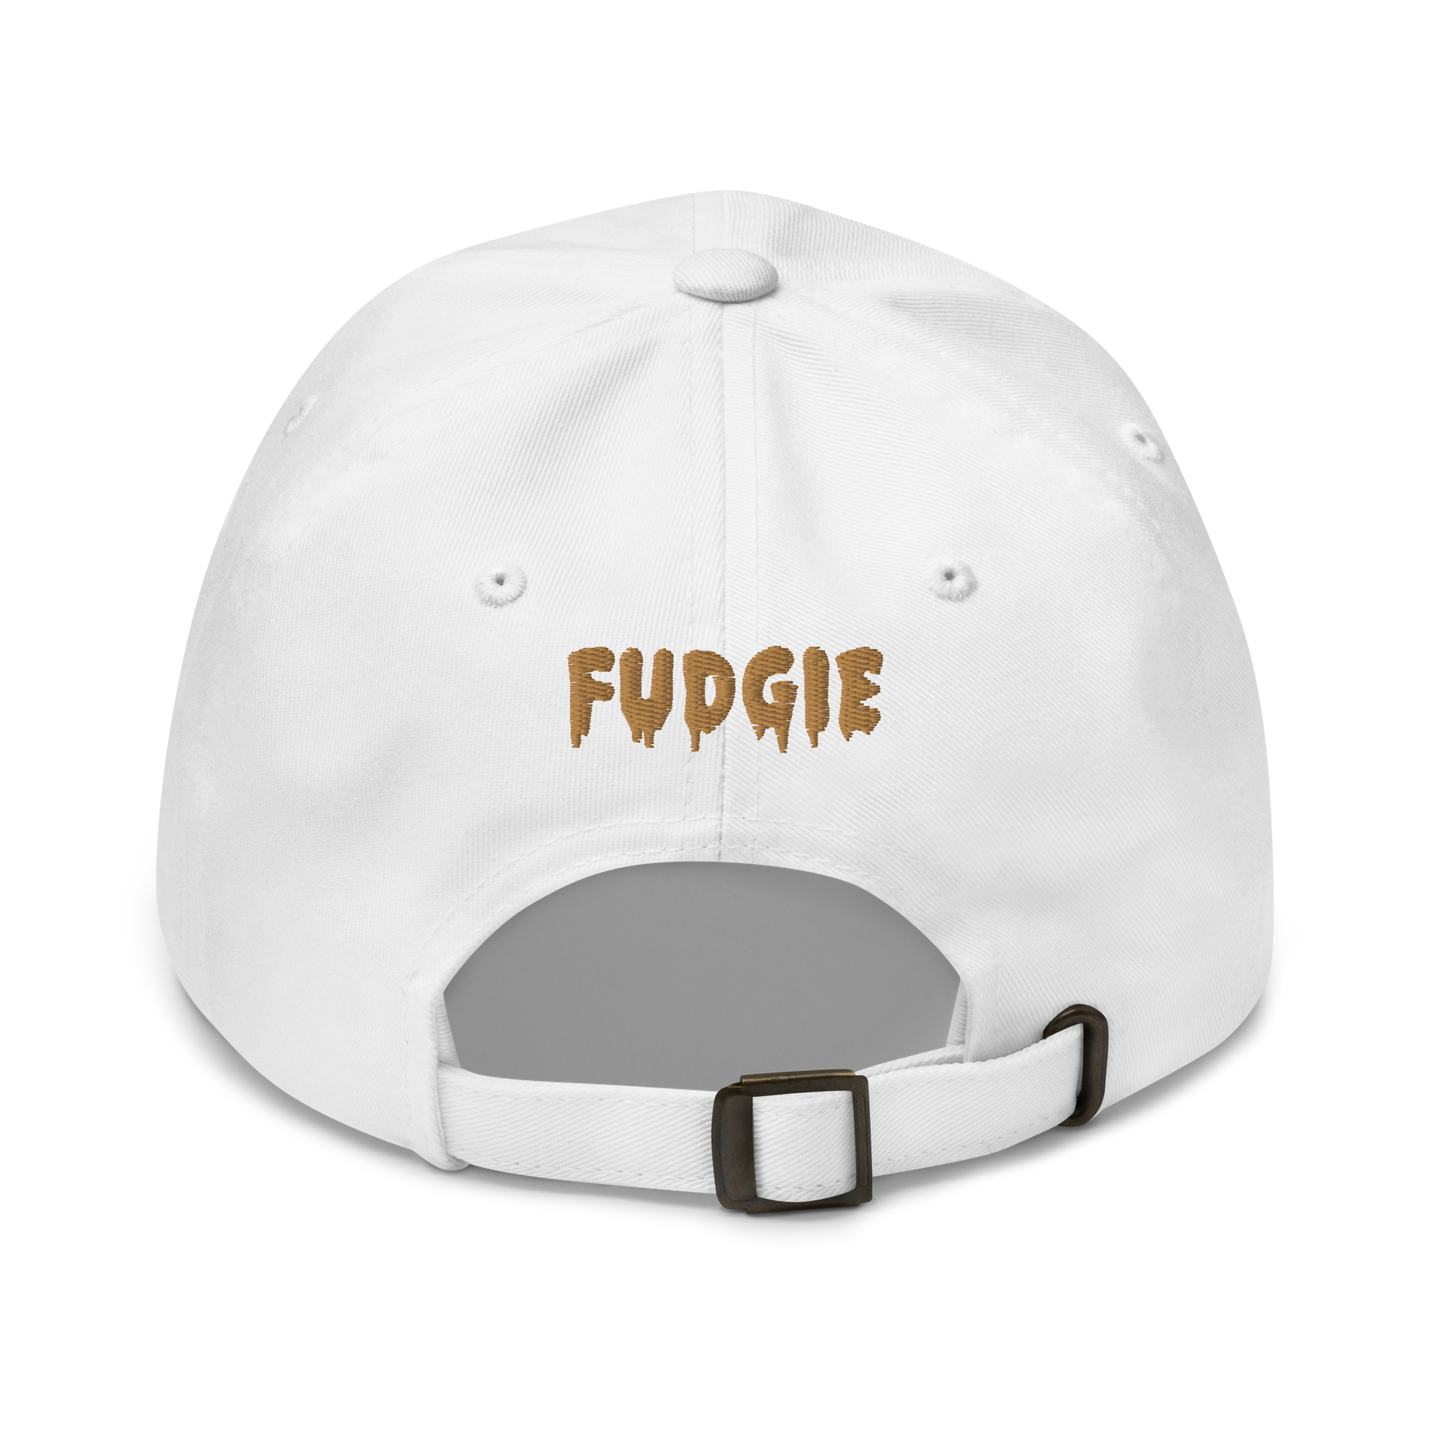 Fudgie Dad hat